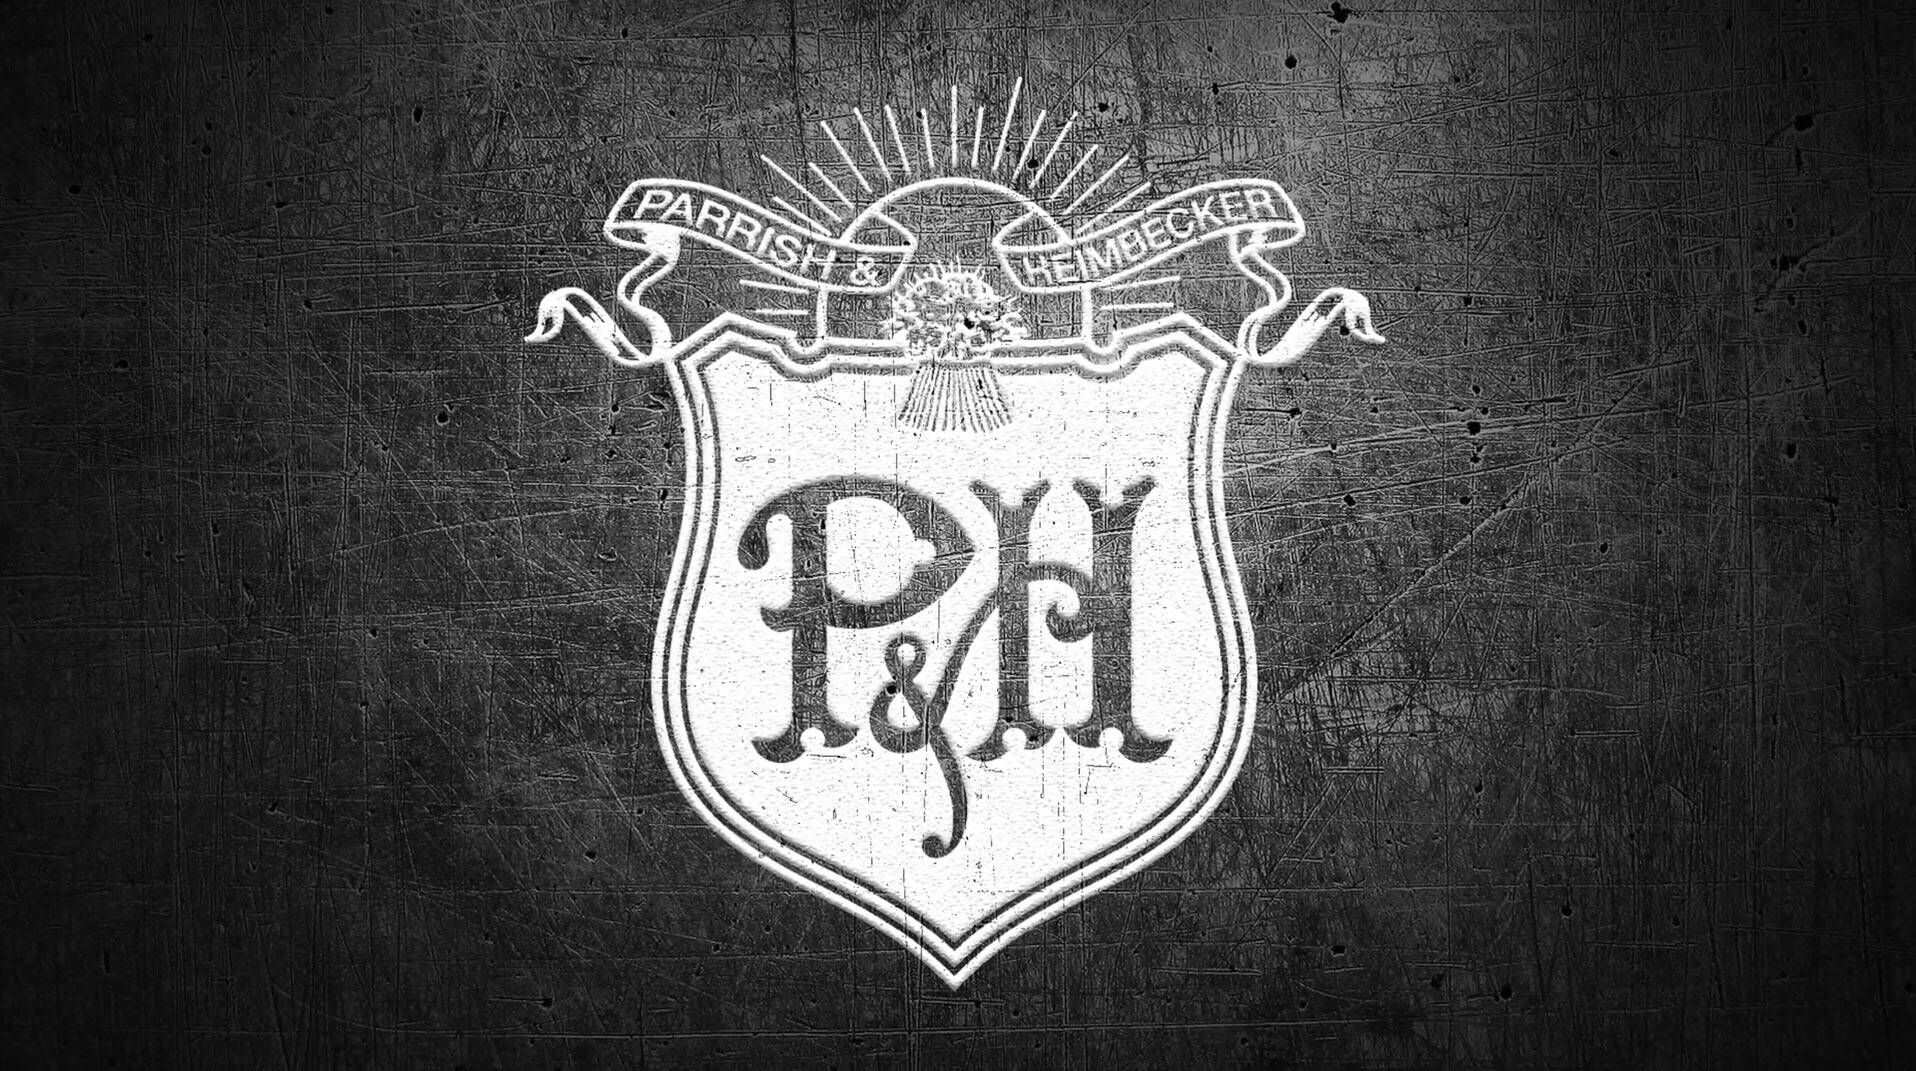 P&H Milling